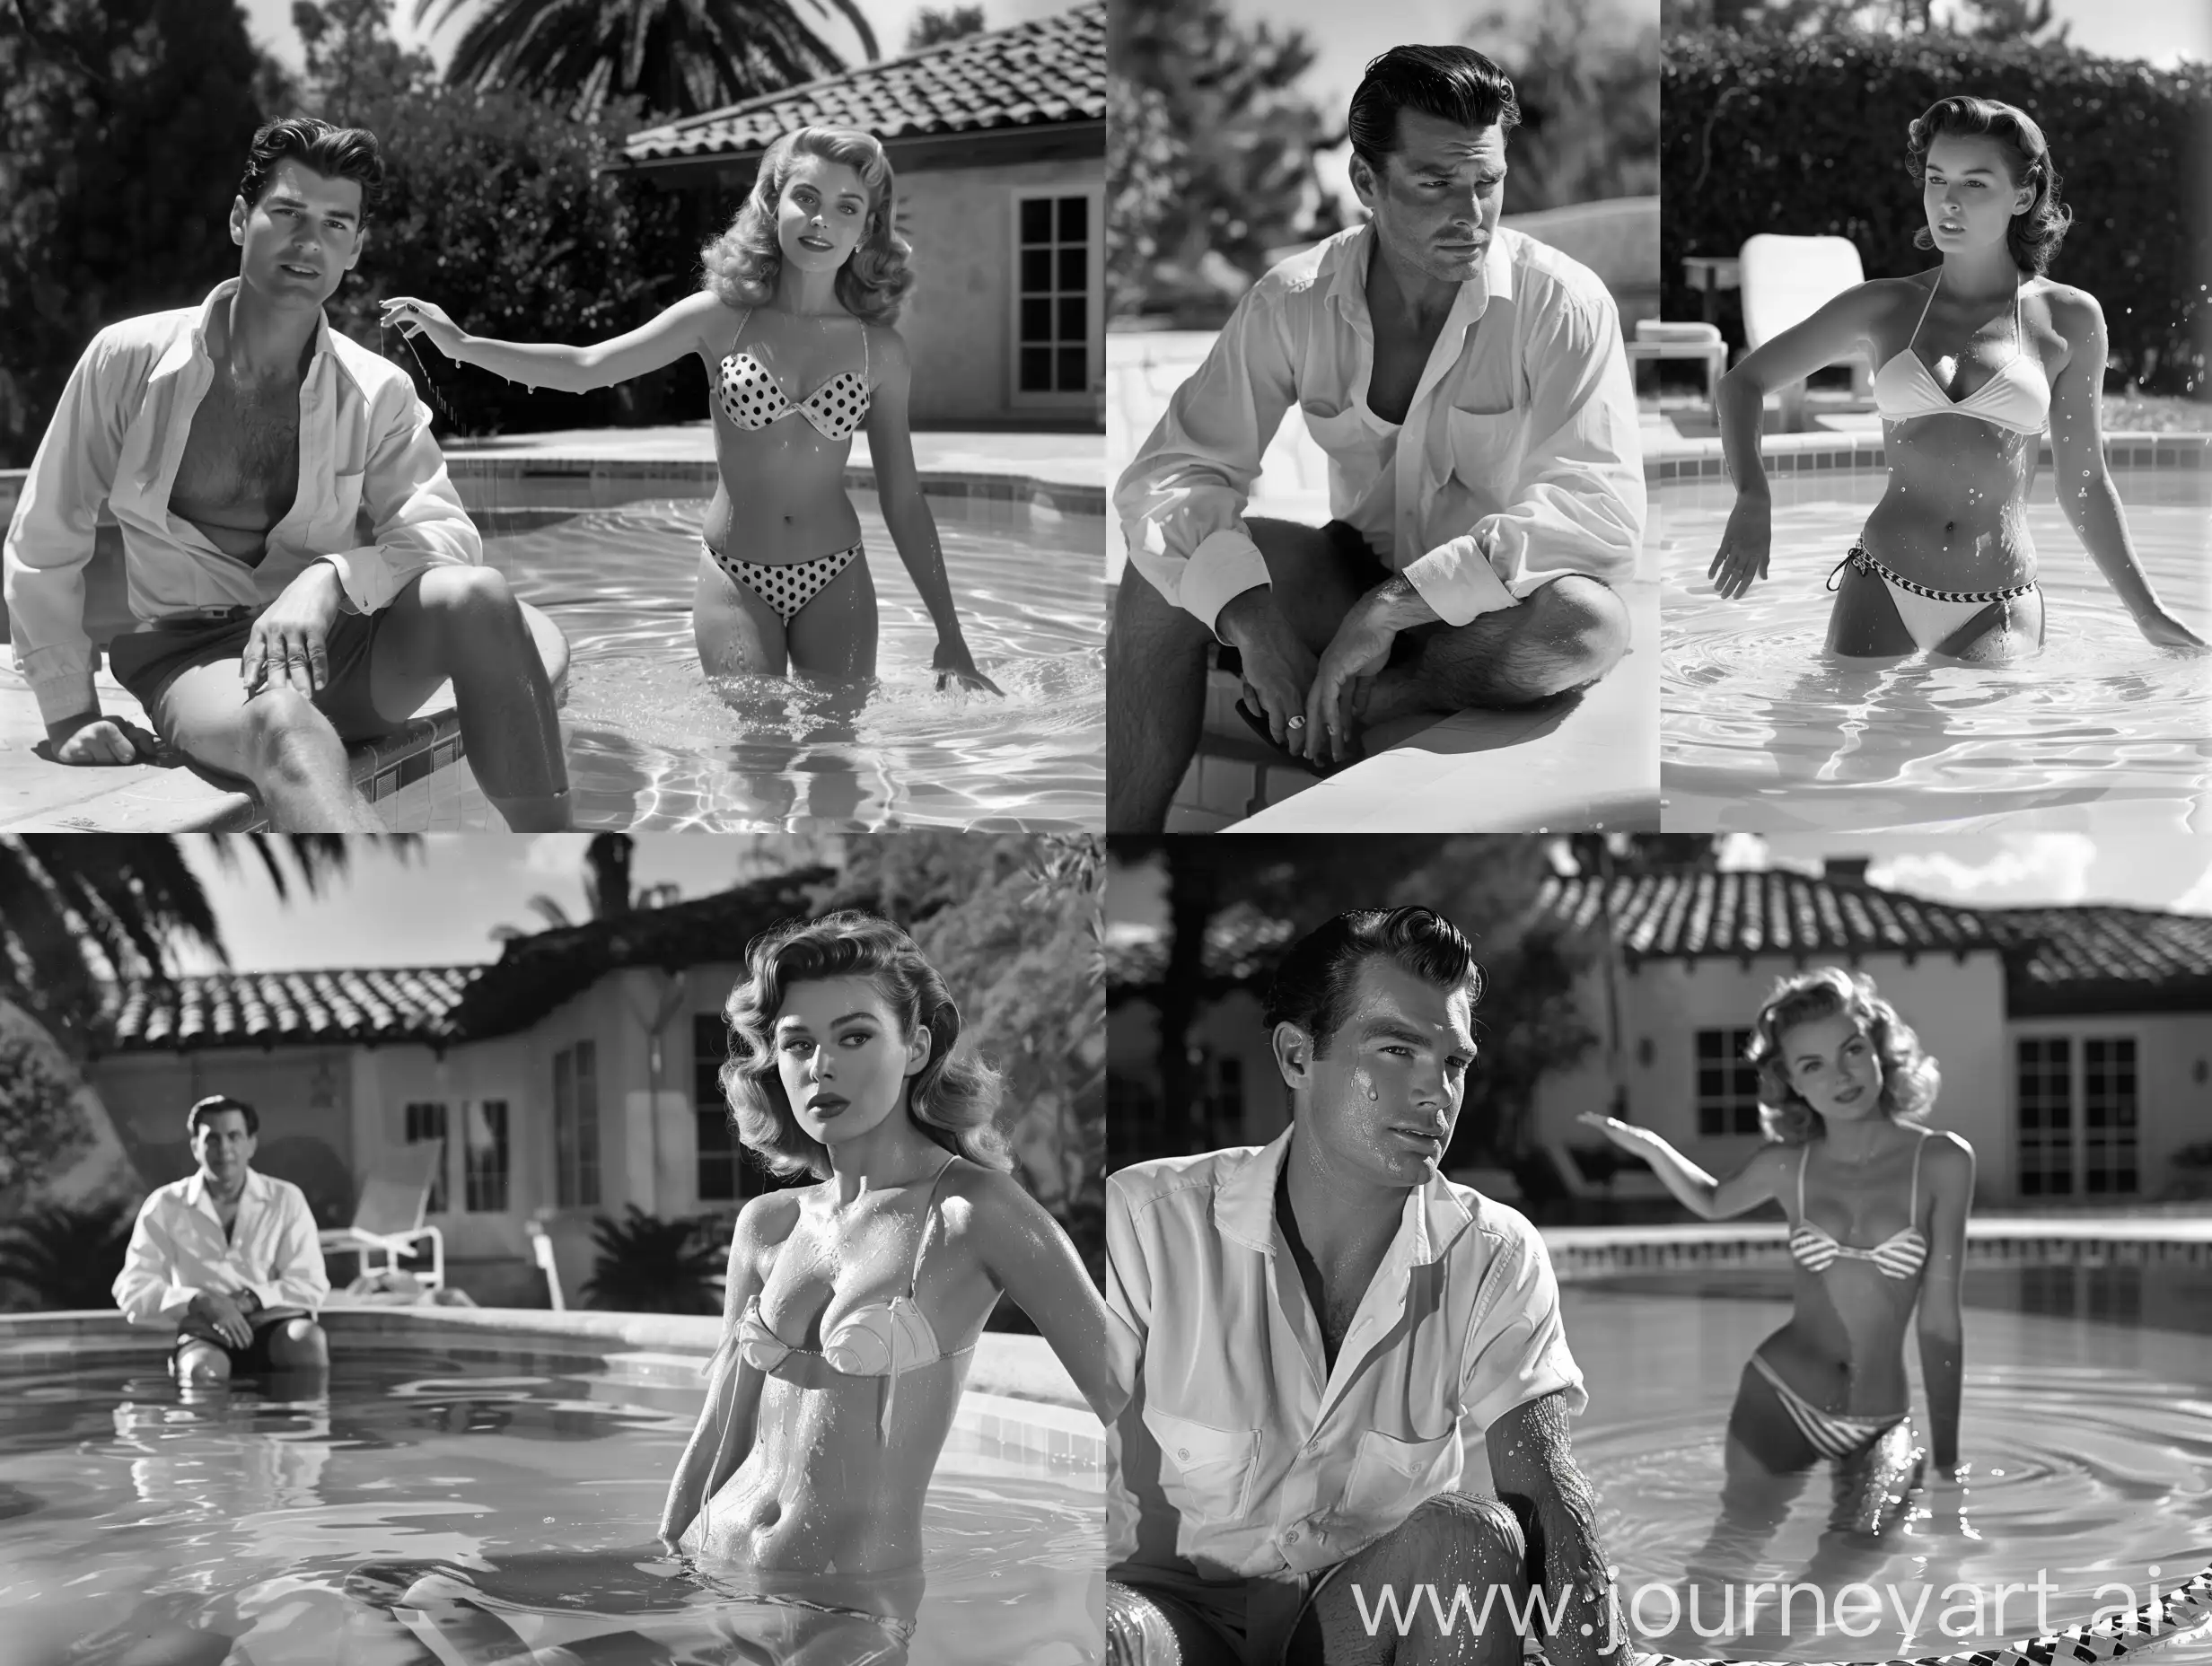 Vintage-Noir-Poolside-Scene-Handsome-Man-and-Pinup-Girl-in-1940s-Attire